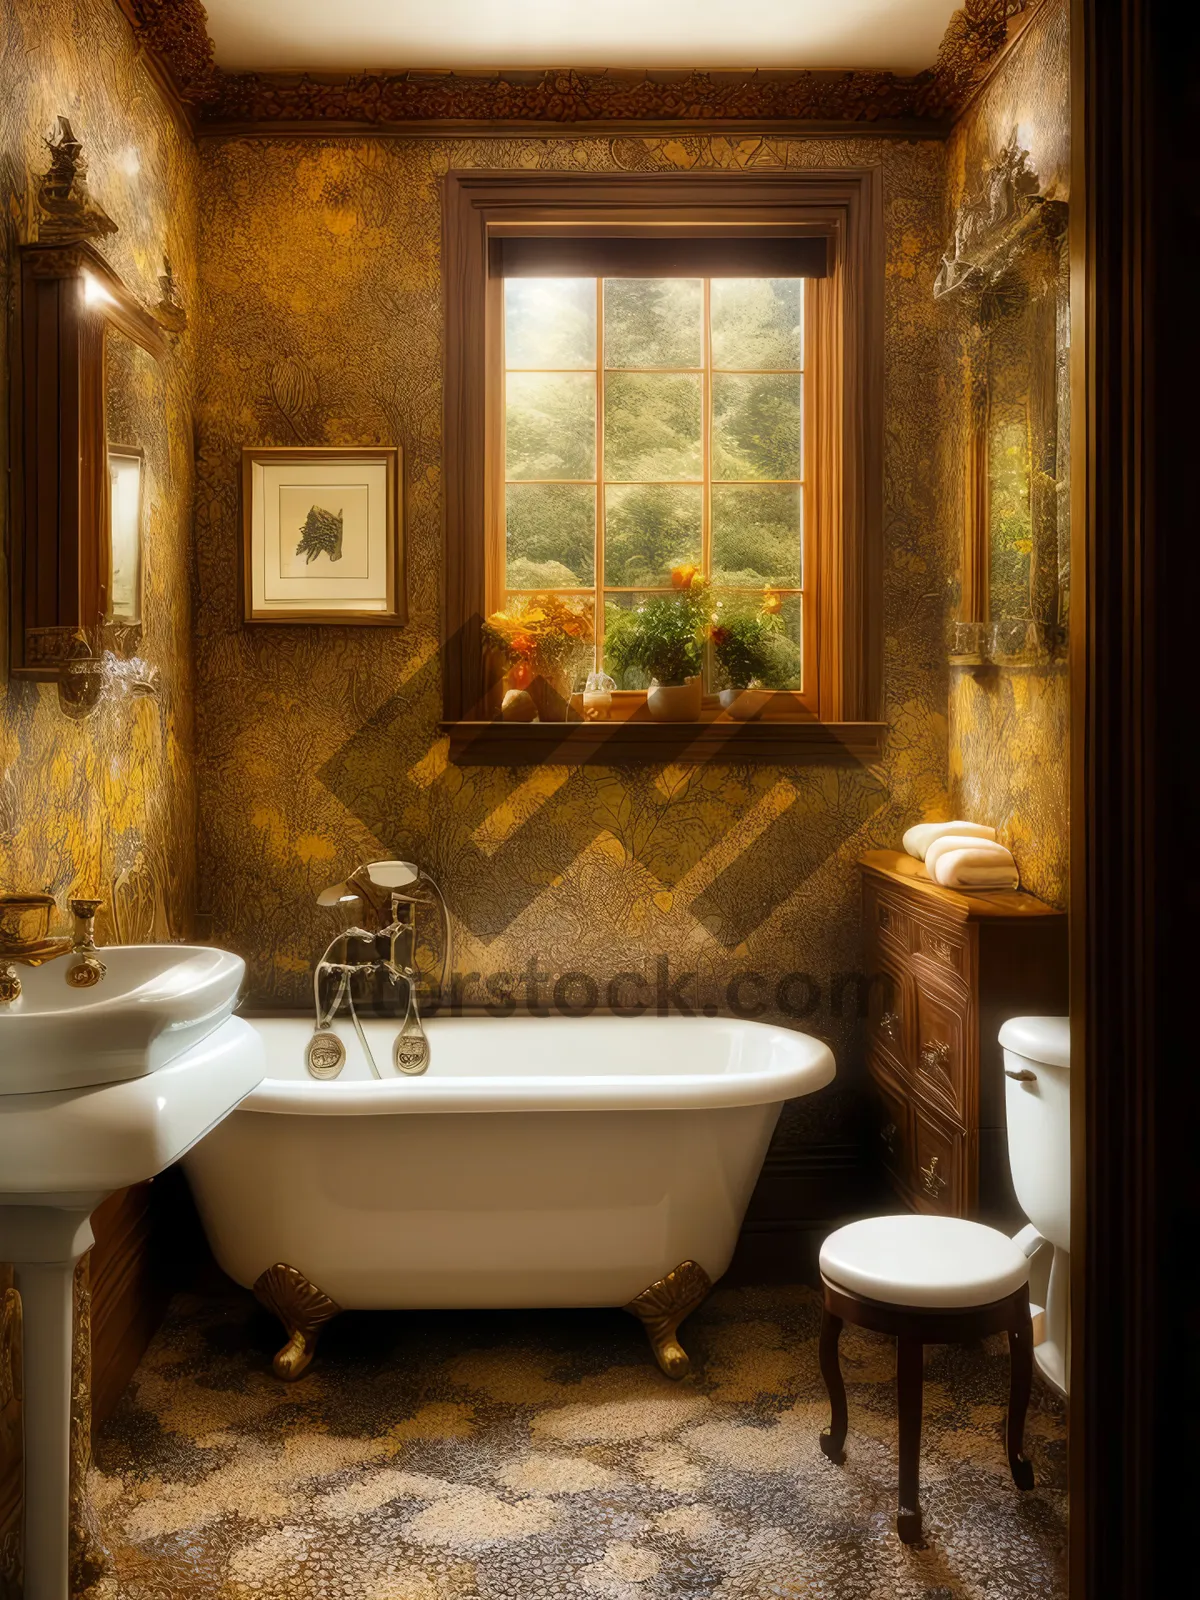 Picture of Modern Luxury Bathroom with Elegant Design